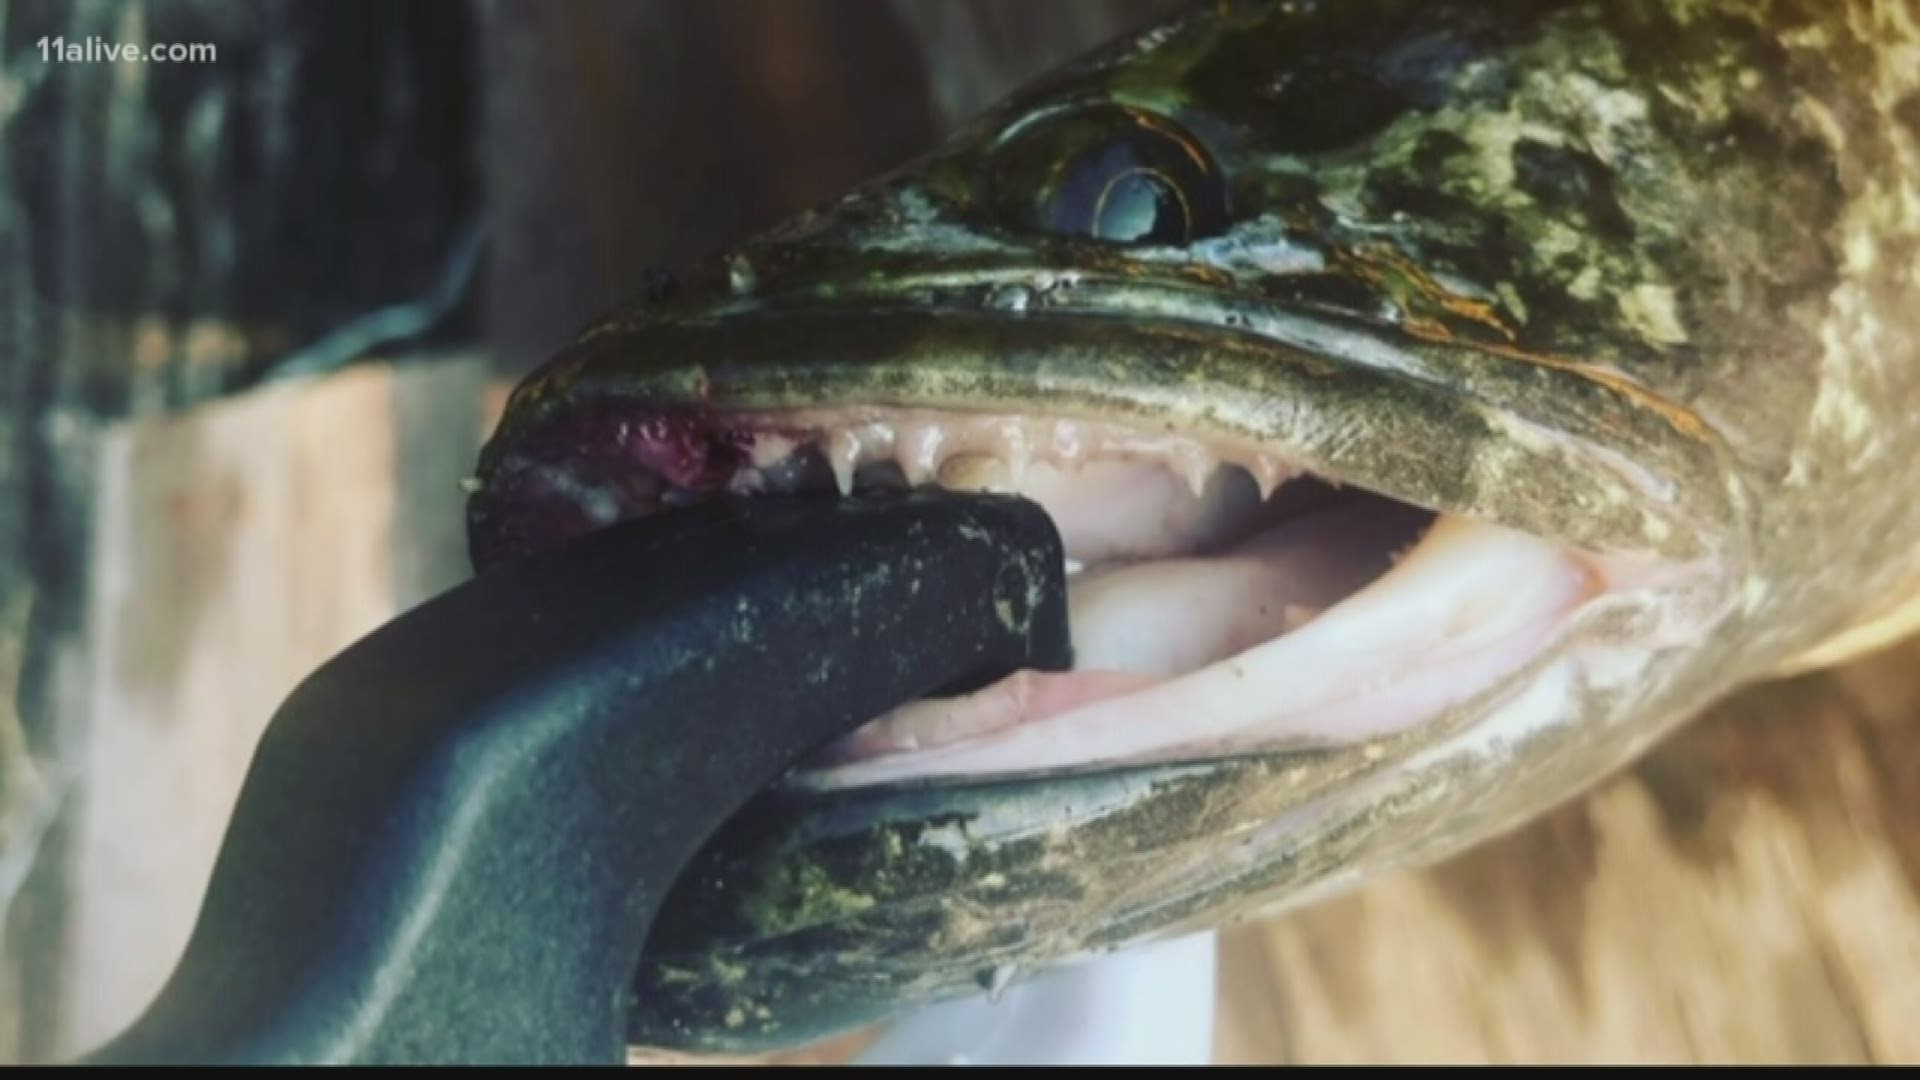 Man describes northern snakehead fish he caught at Gwinnett pond